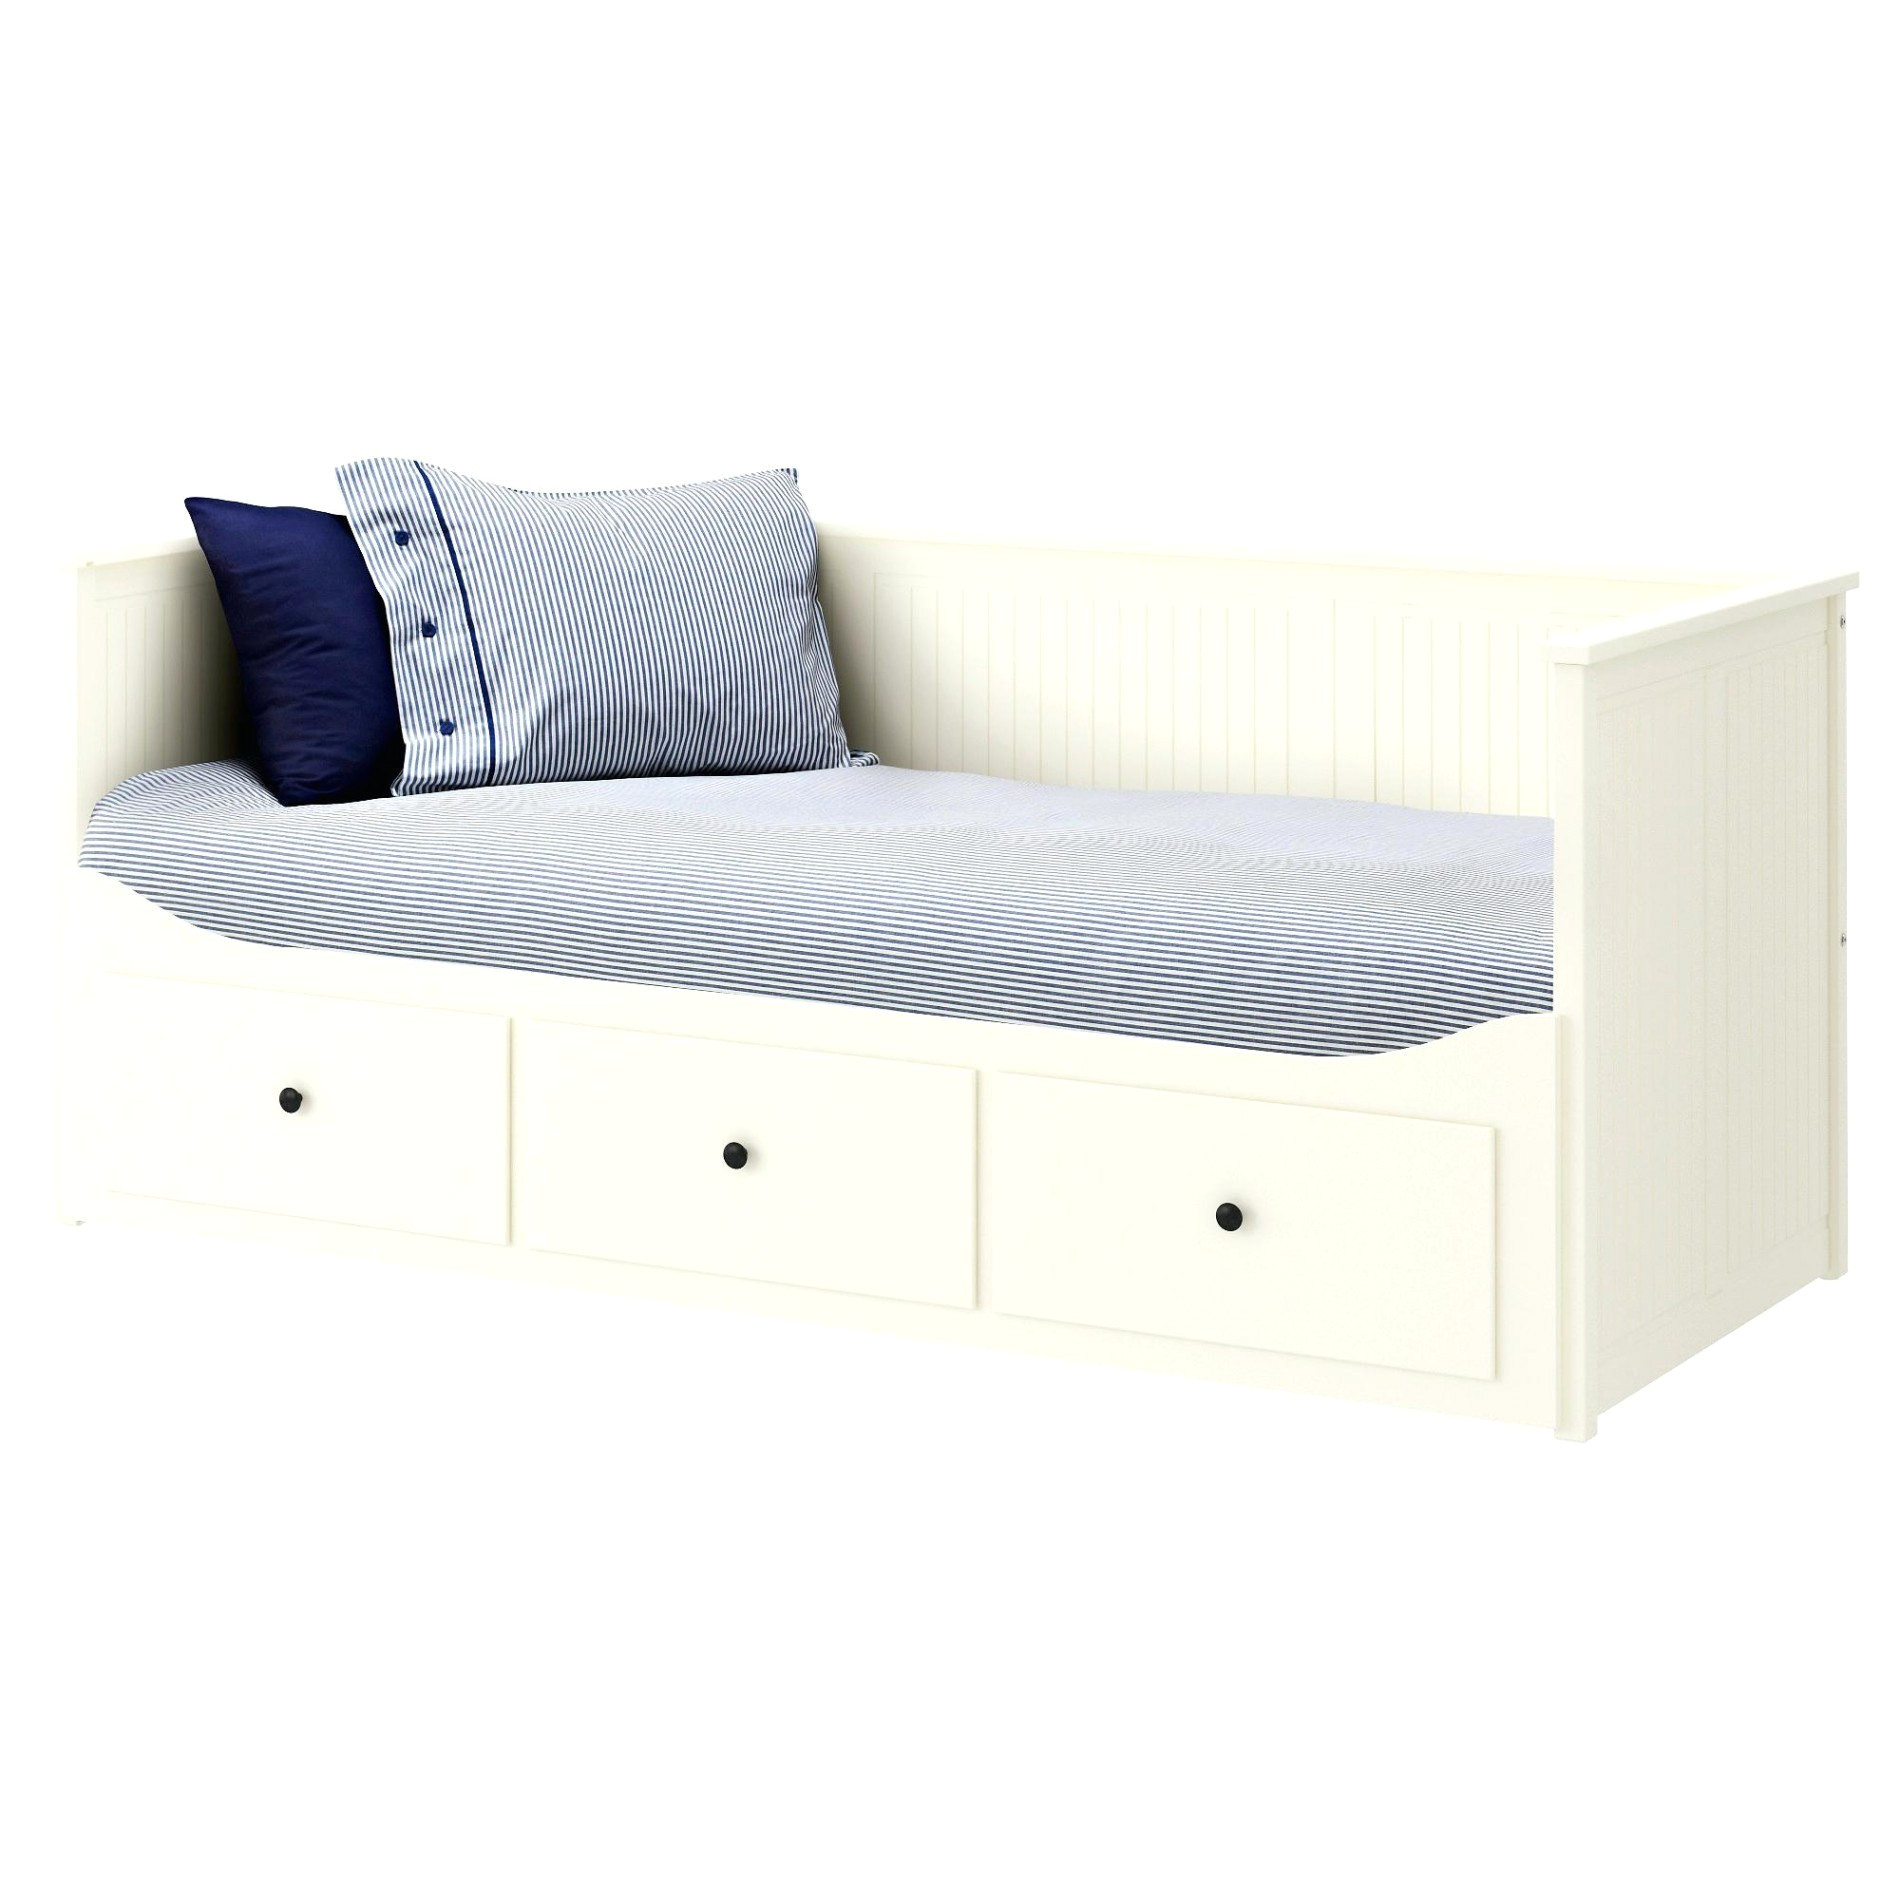 Instructions for Ikea Hemnes Day Bed Ikea Hemnes sofa Schtimm Com